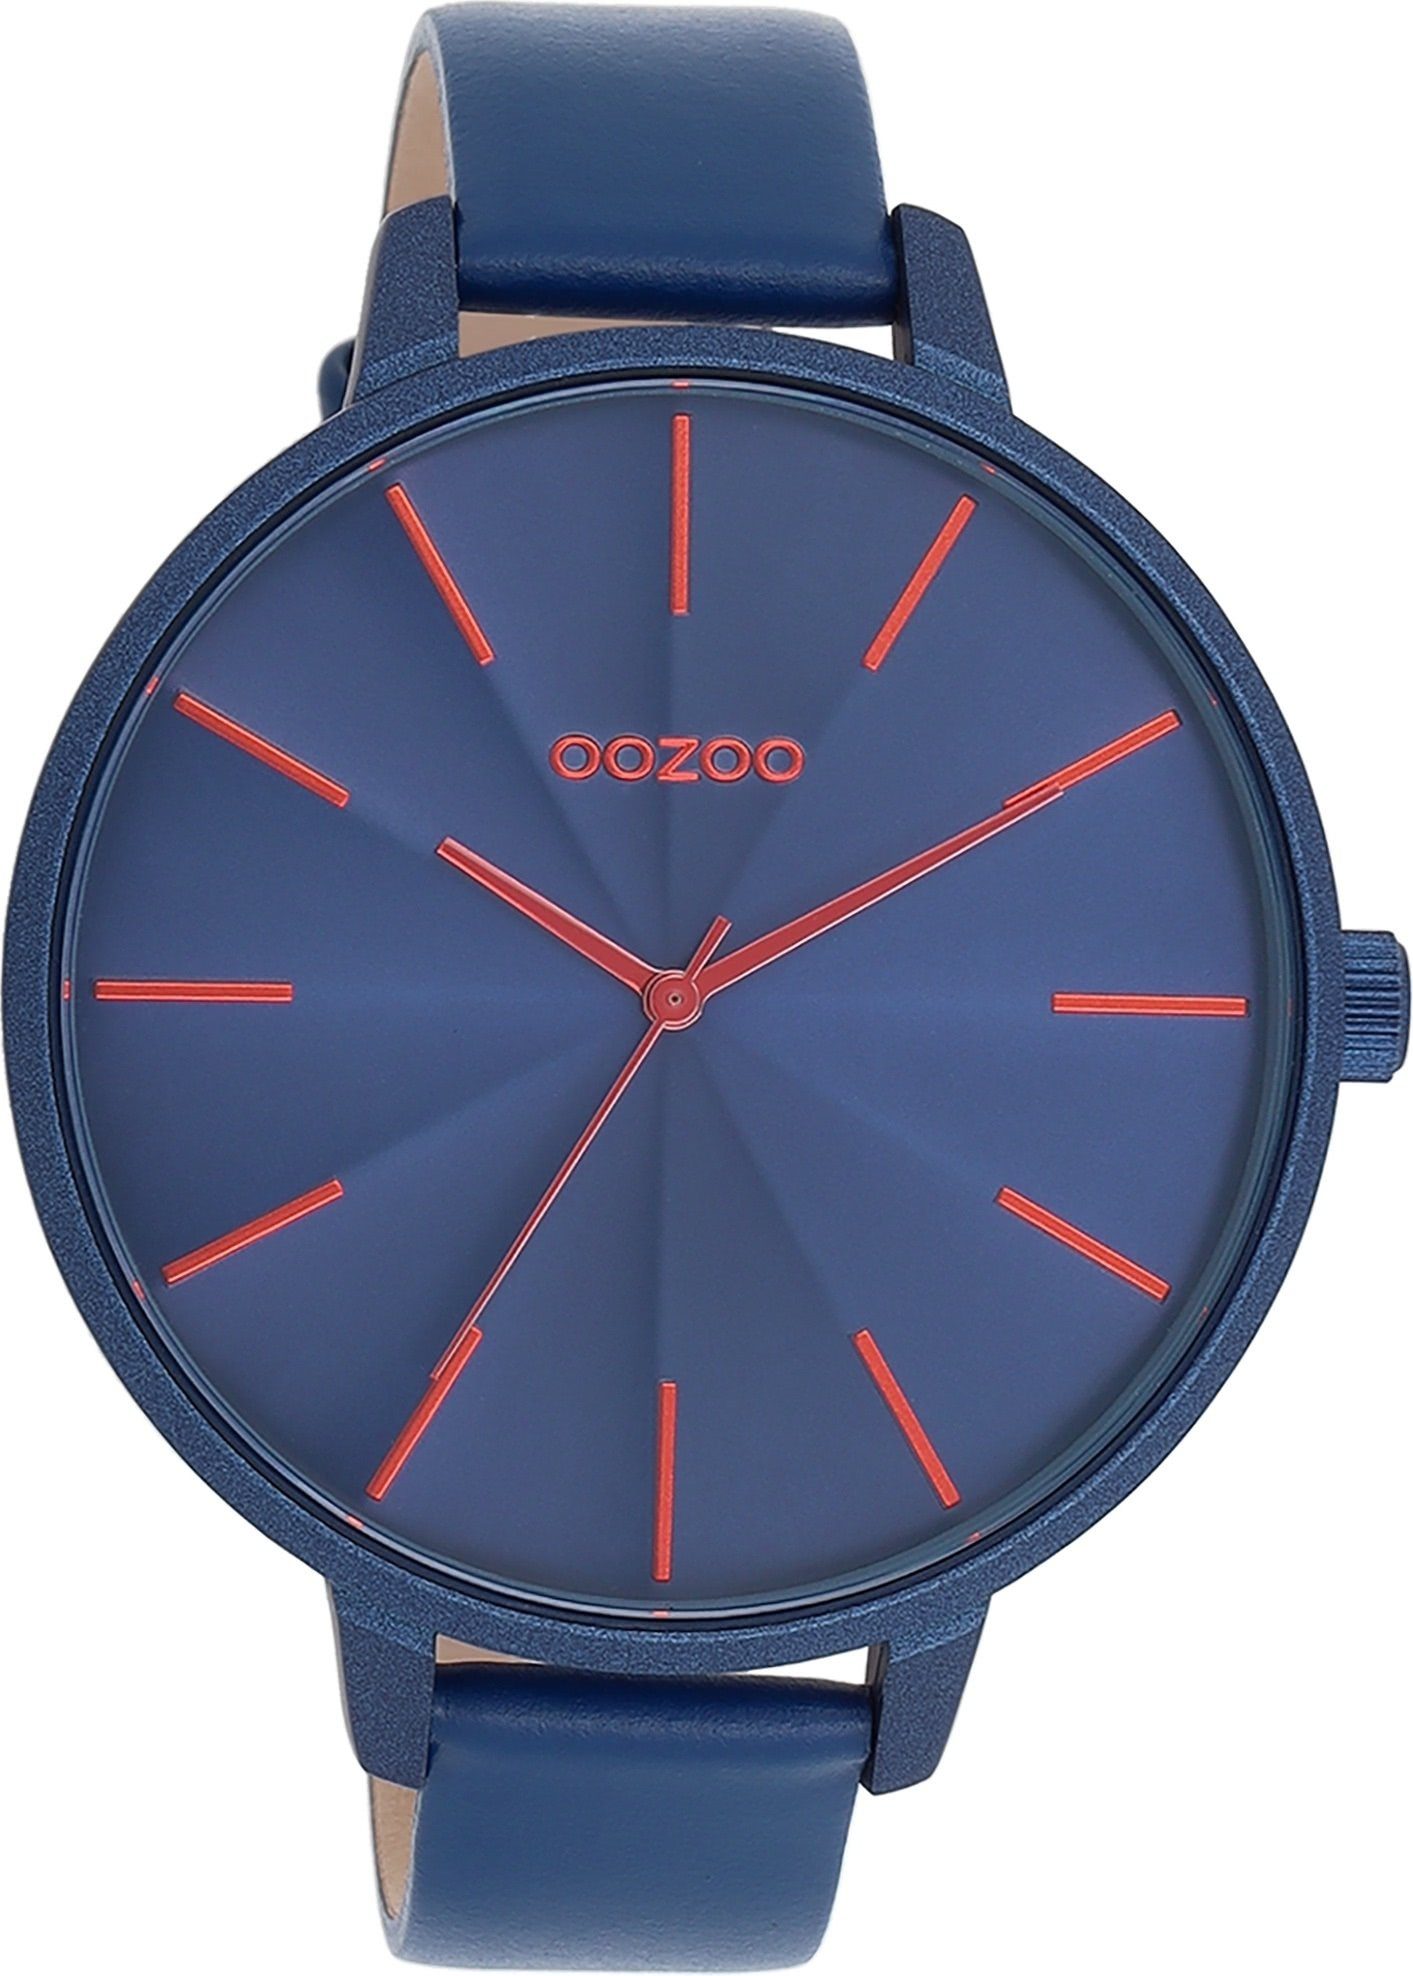 (ca. groß Armbanduhr Lederarmband, OOZOO rund, Quarzuhr Fashion-Style Timepieces Analog, Damenuhr extra Damen 48mm) Oozoo